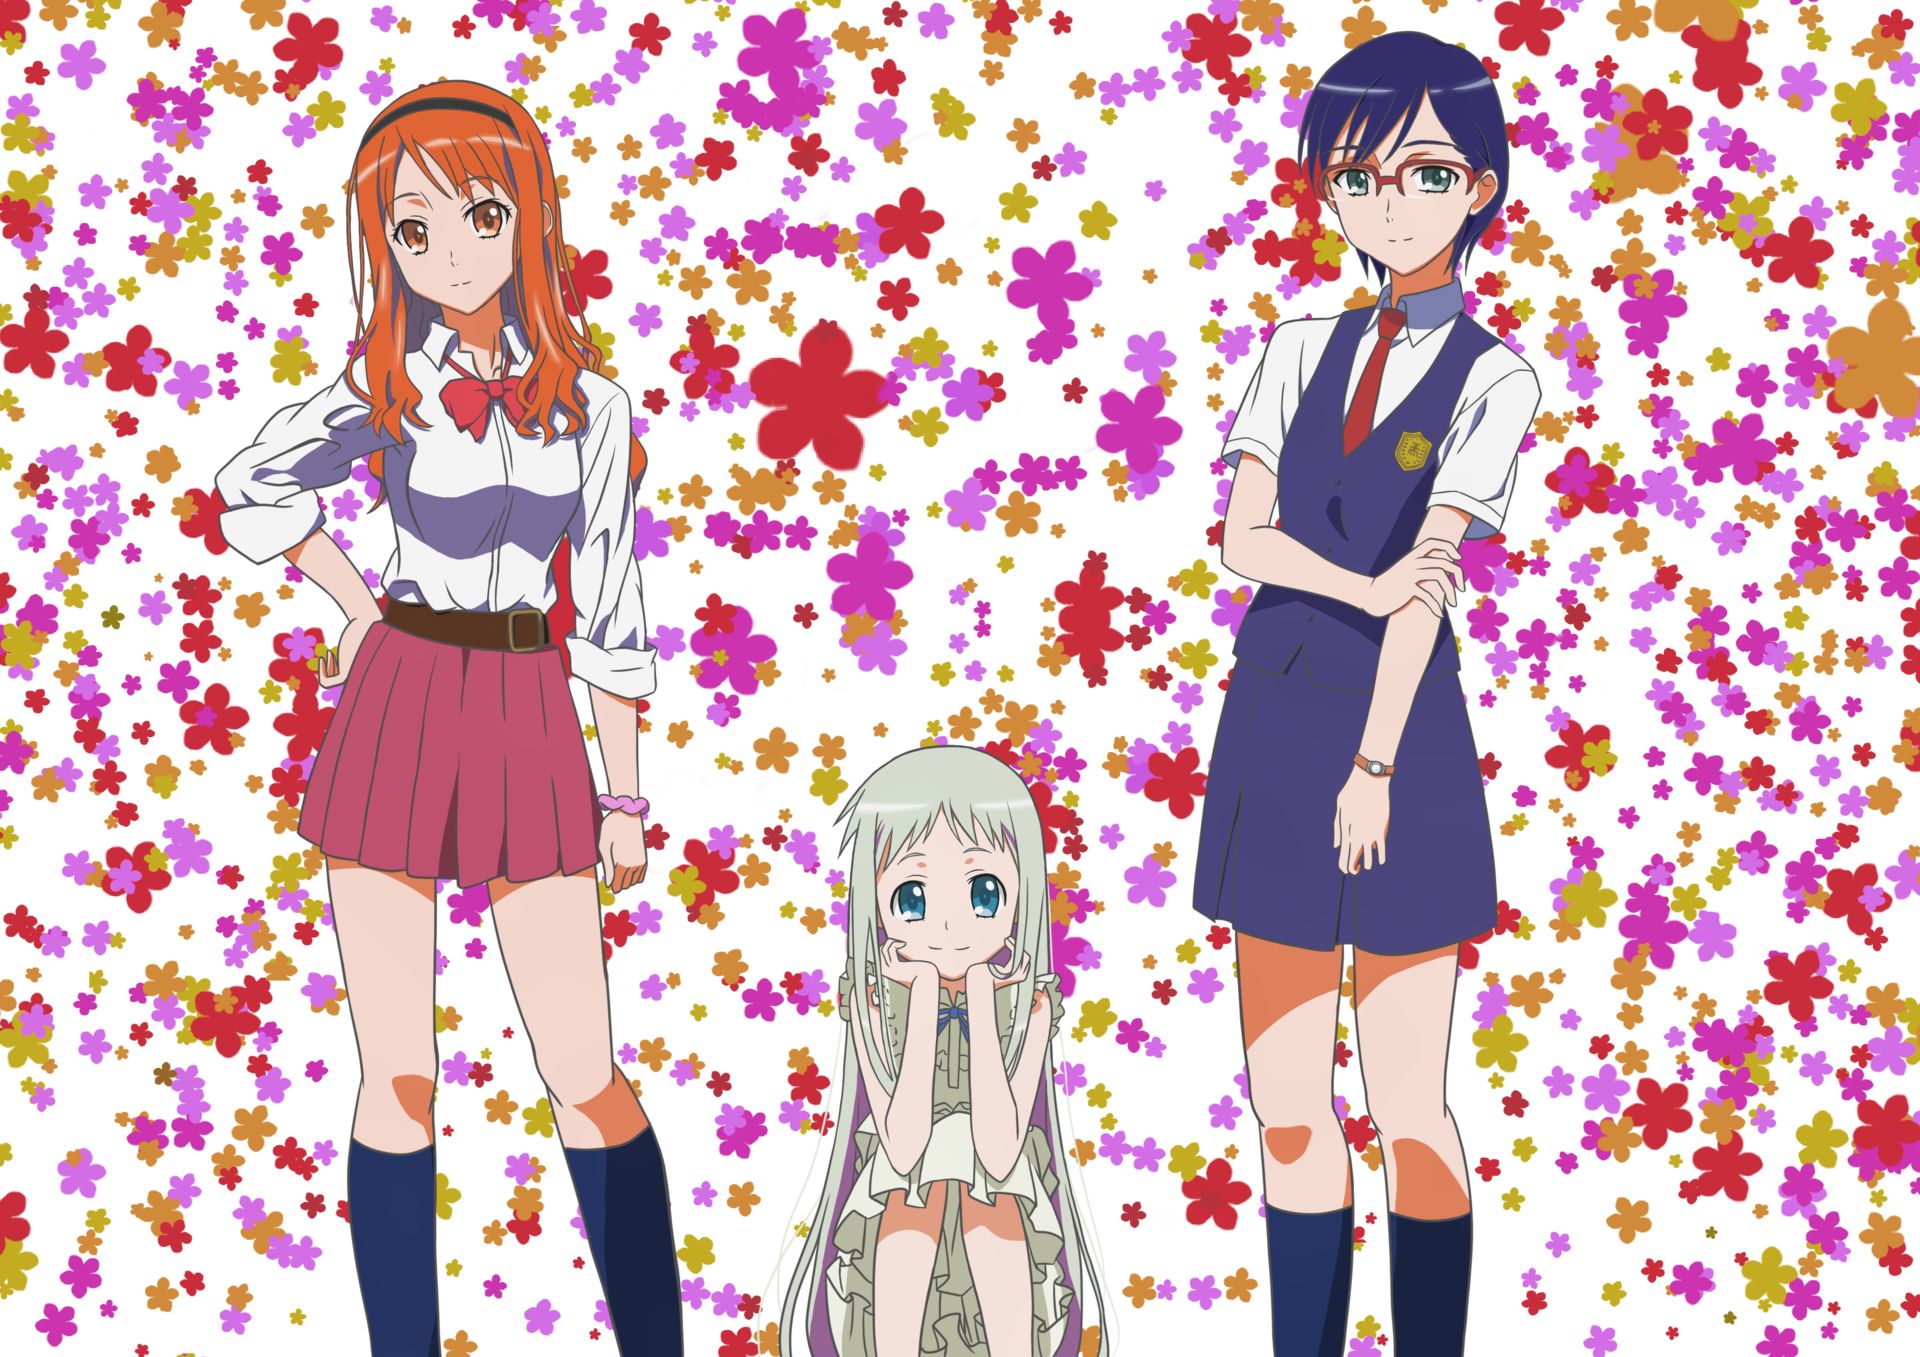 970465 Bild herunterladen animes, anohana, chiriko tsurumi, meiko honma, naruko anjou - Hintergrundbilder und Bildschirmschoner kostenlos